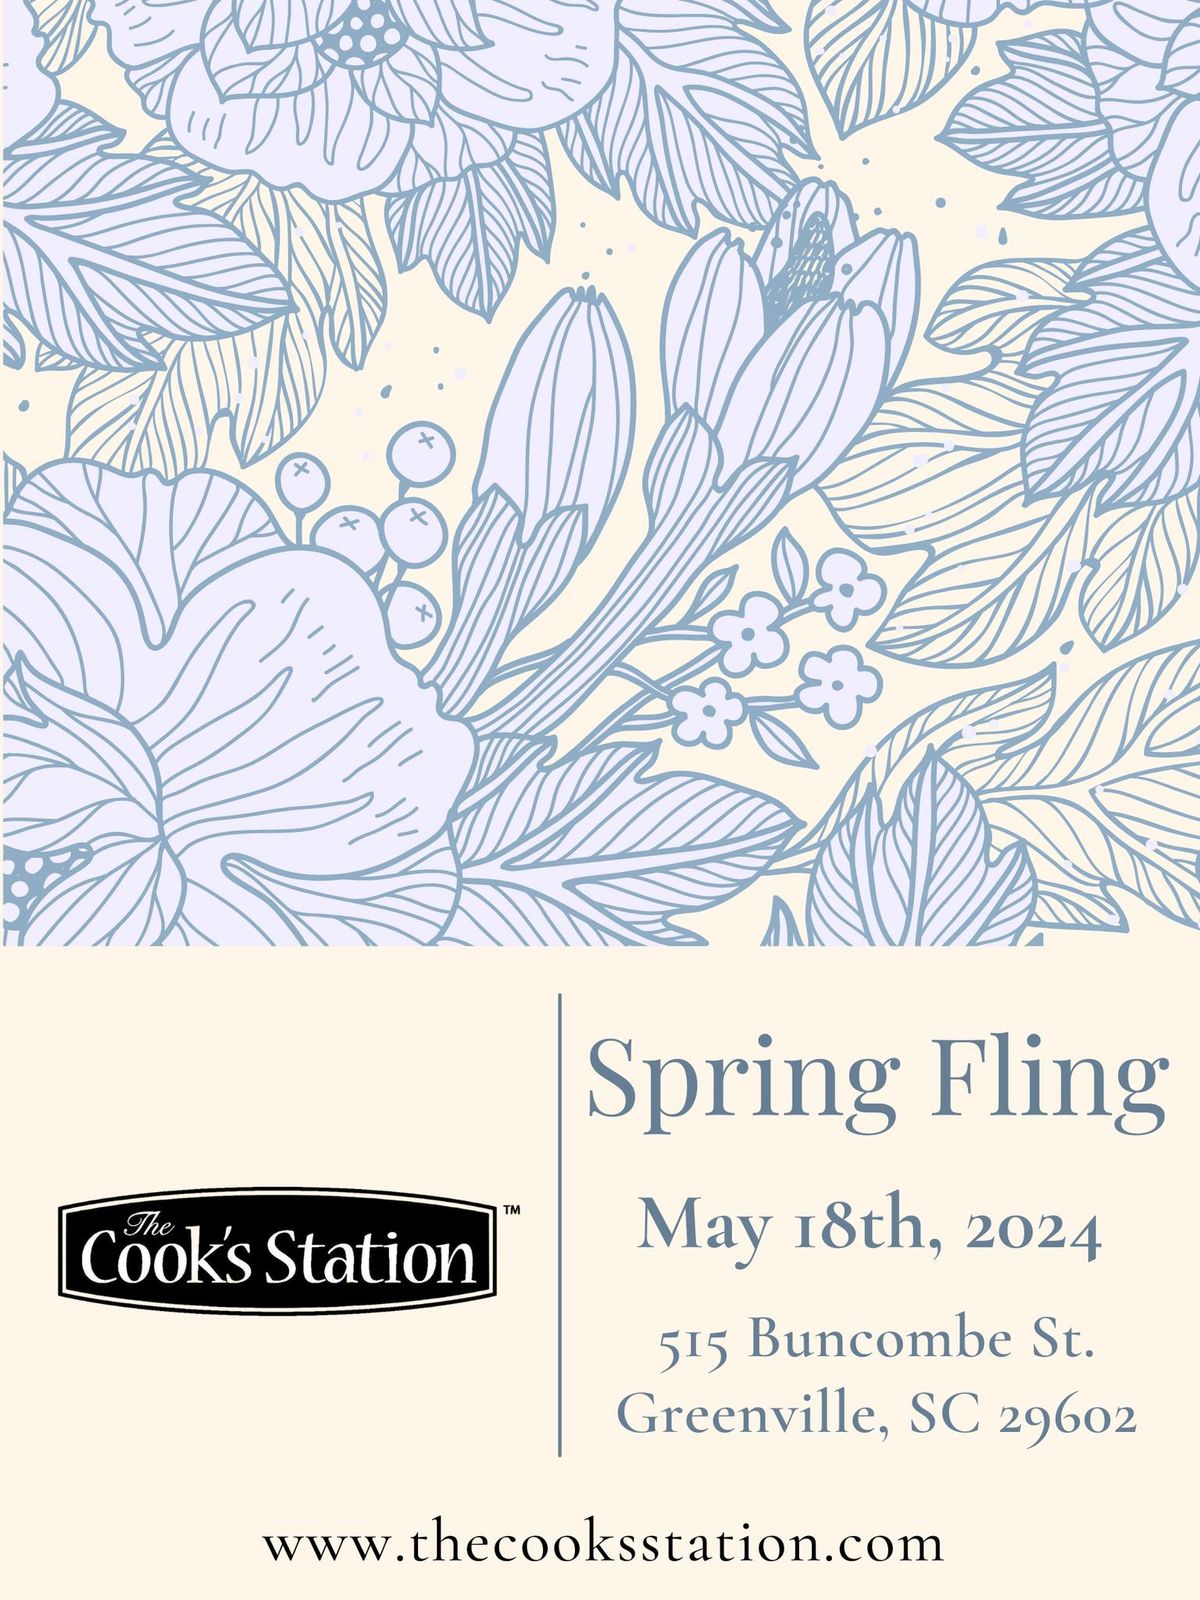 The Cook's Station's Spring Fling! 